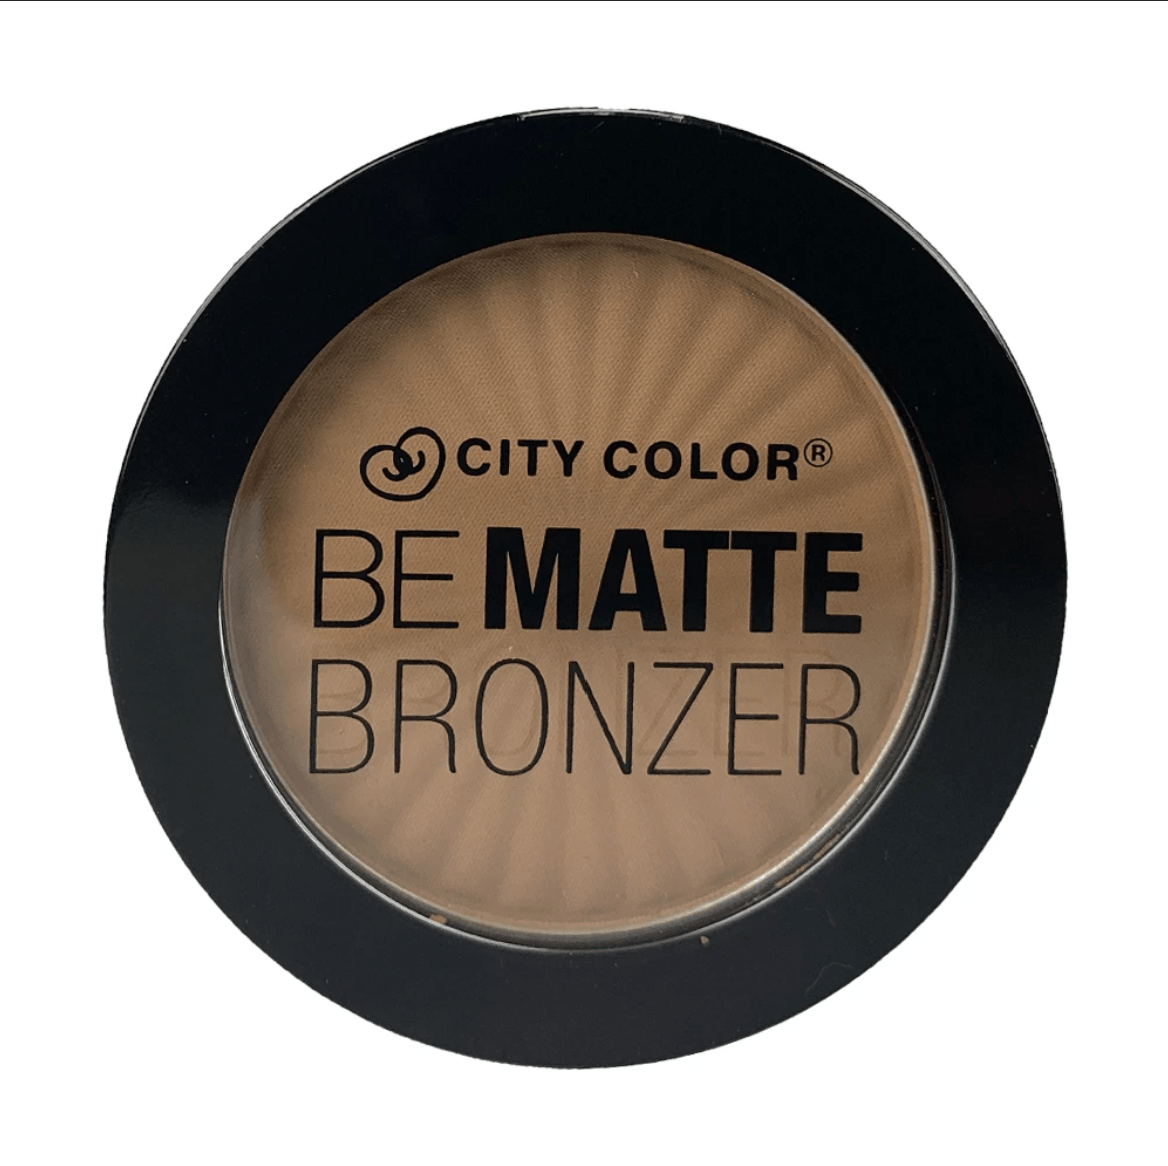 Be Matte Bronzer